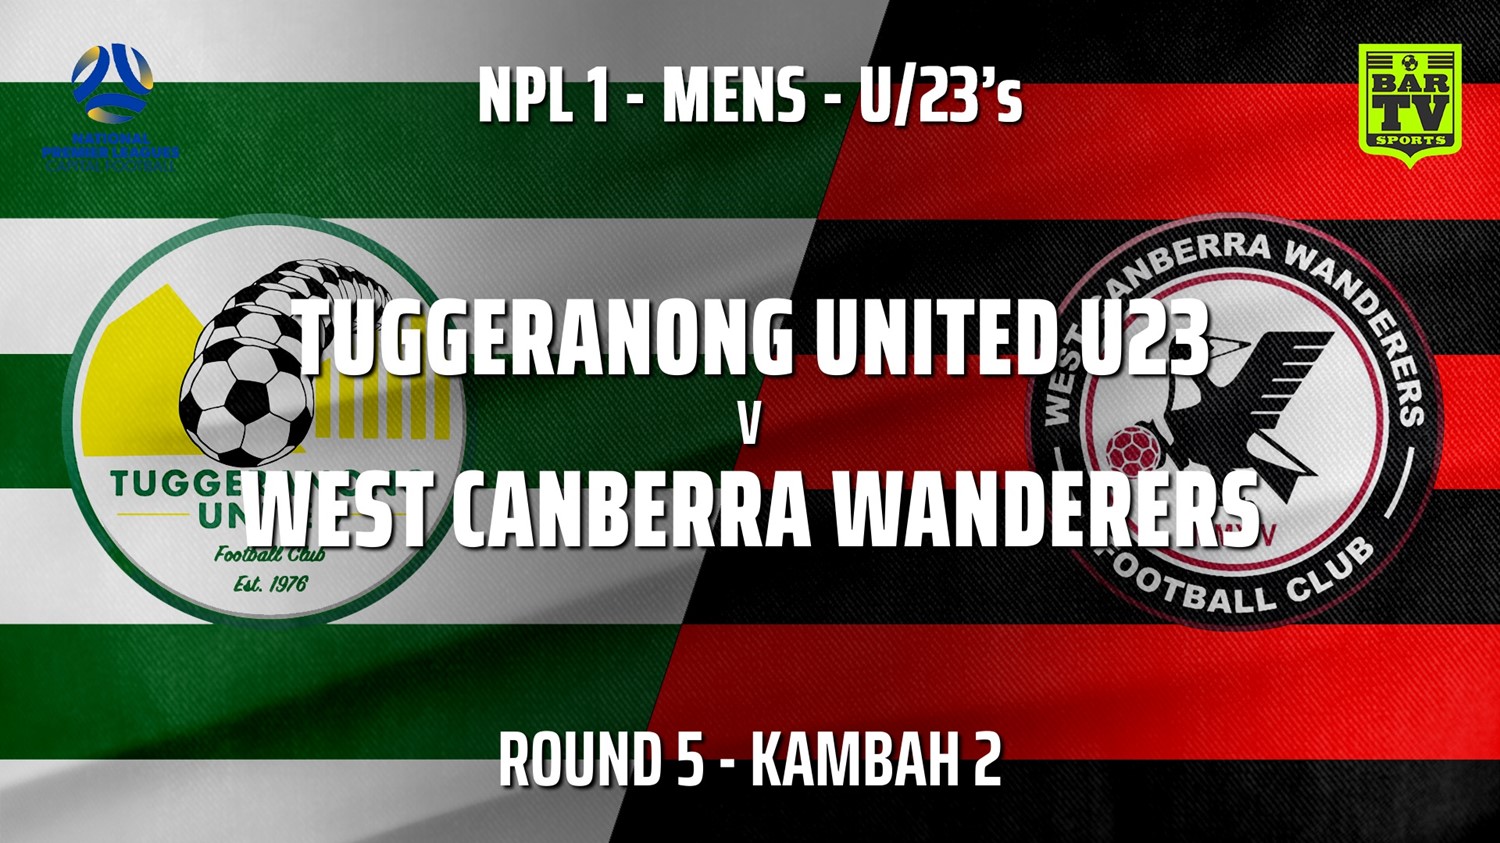 210509-NPL1 U23 Capital Round 5 - Tuggeranong United U23 v West Canberra Wanderers U23s Minigame Slate Image